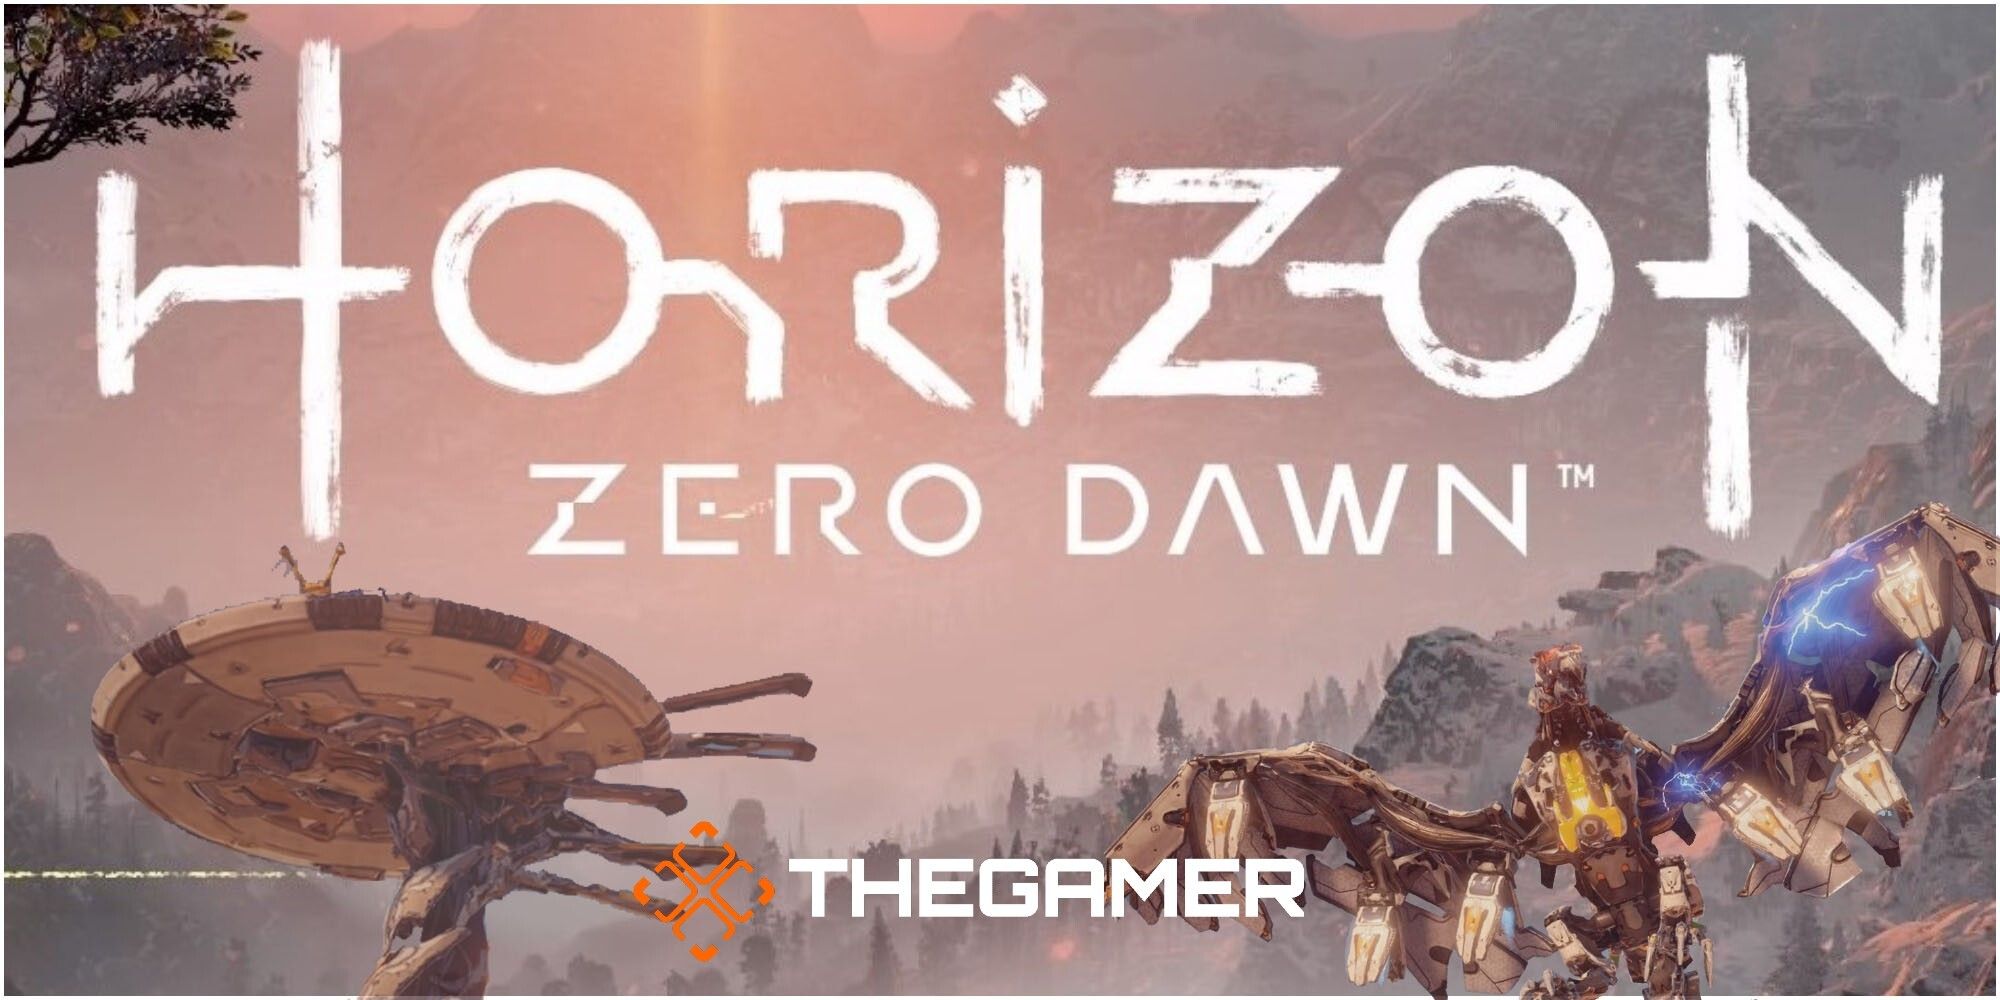 Horizon Zero Dawn DLC NEW MACHINE, OUTFITS & MORE REVEALED